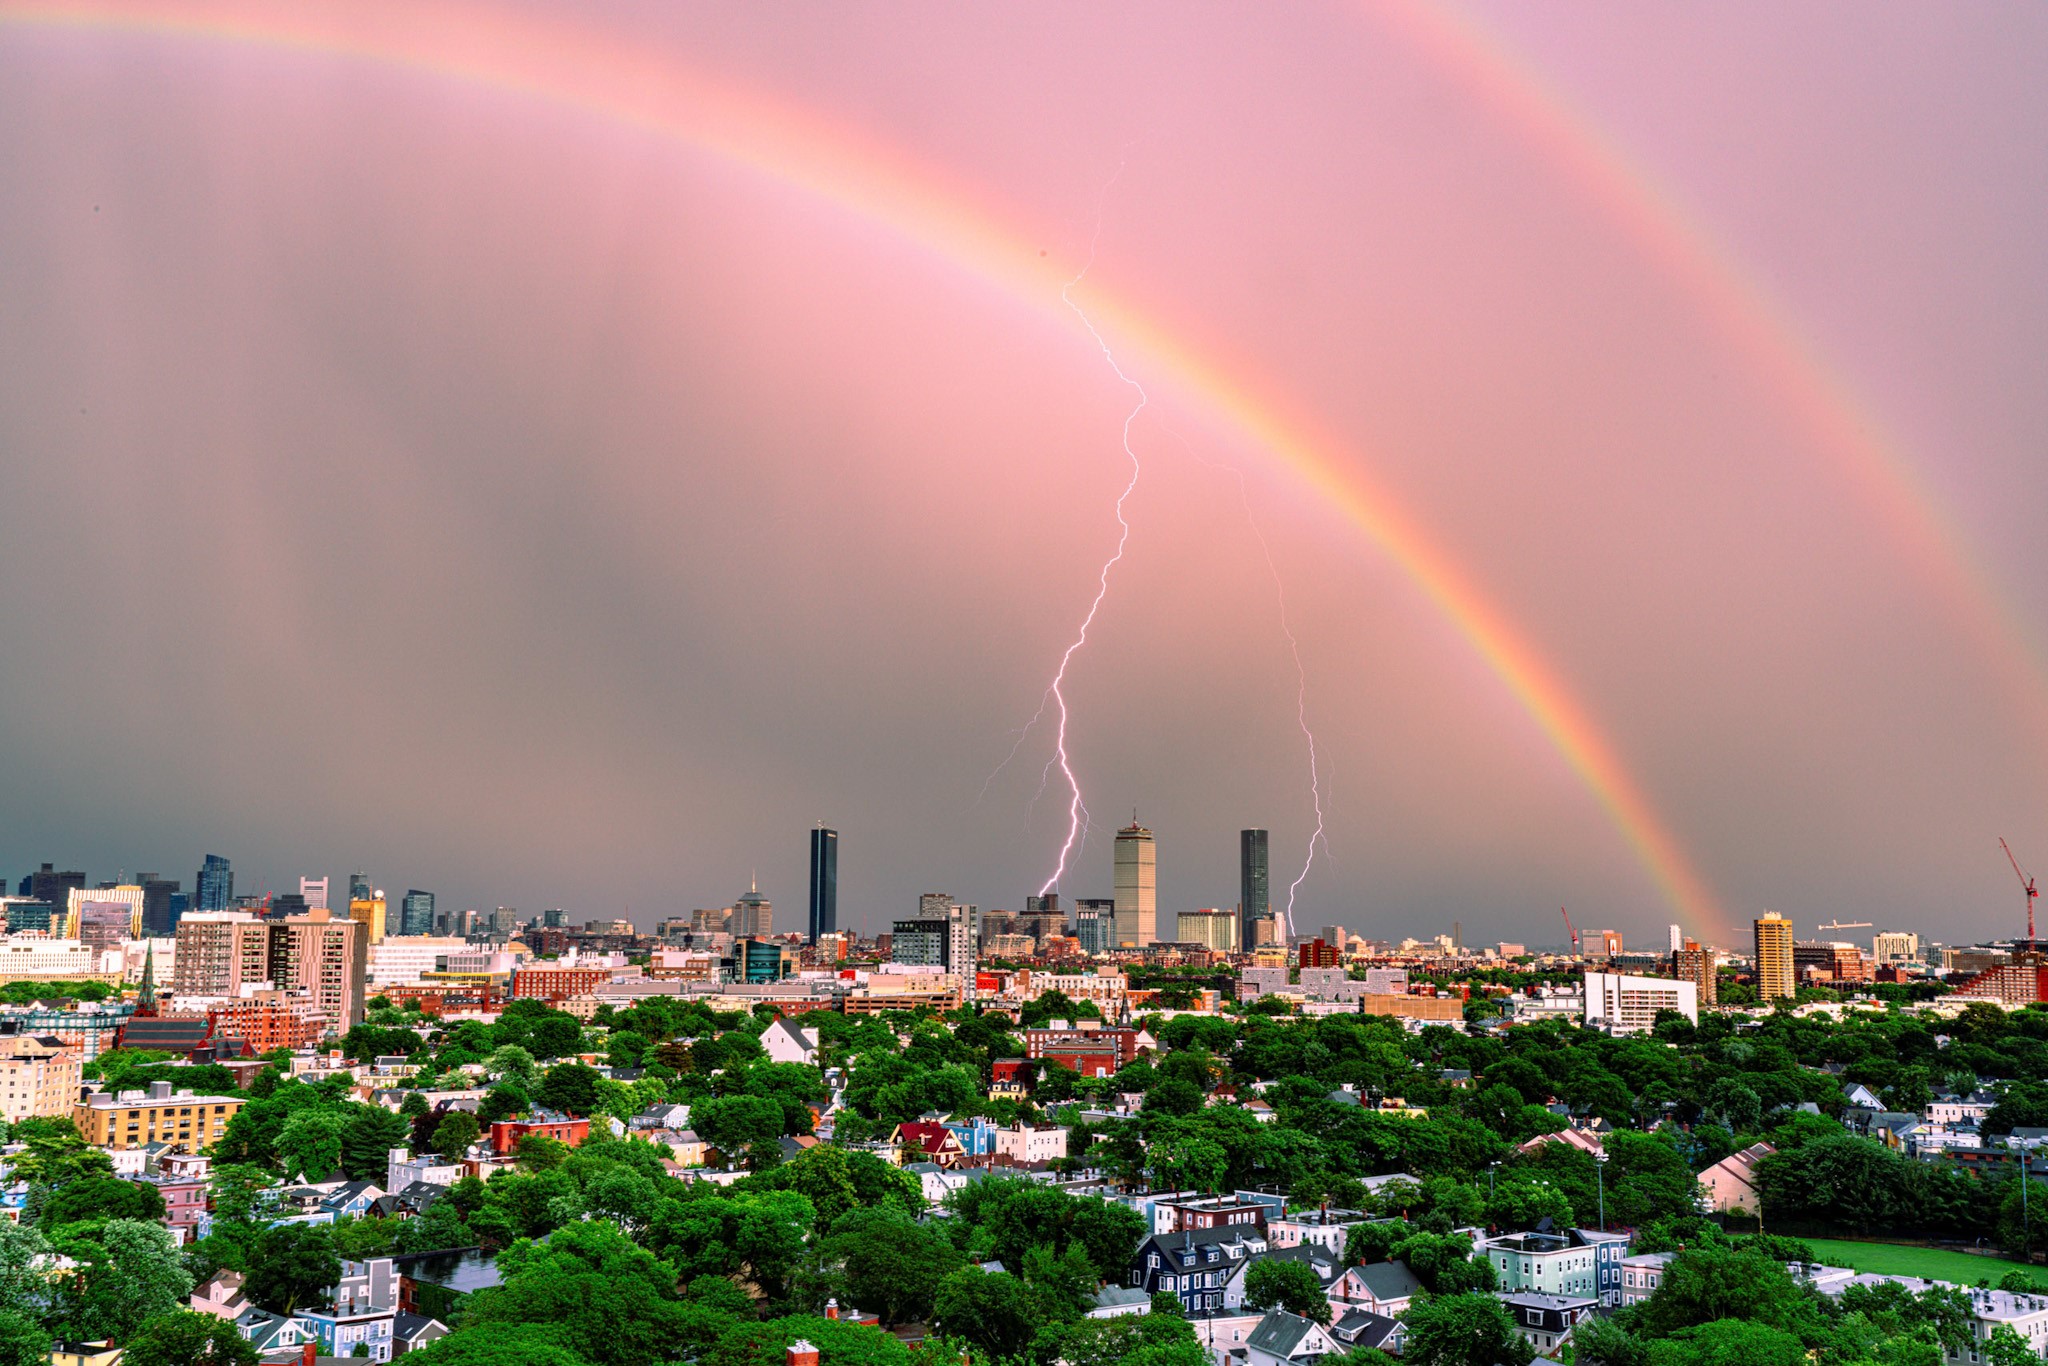 double rainbow and lightning over Boston skyline